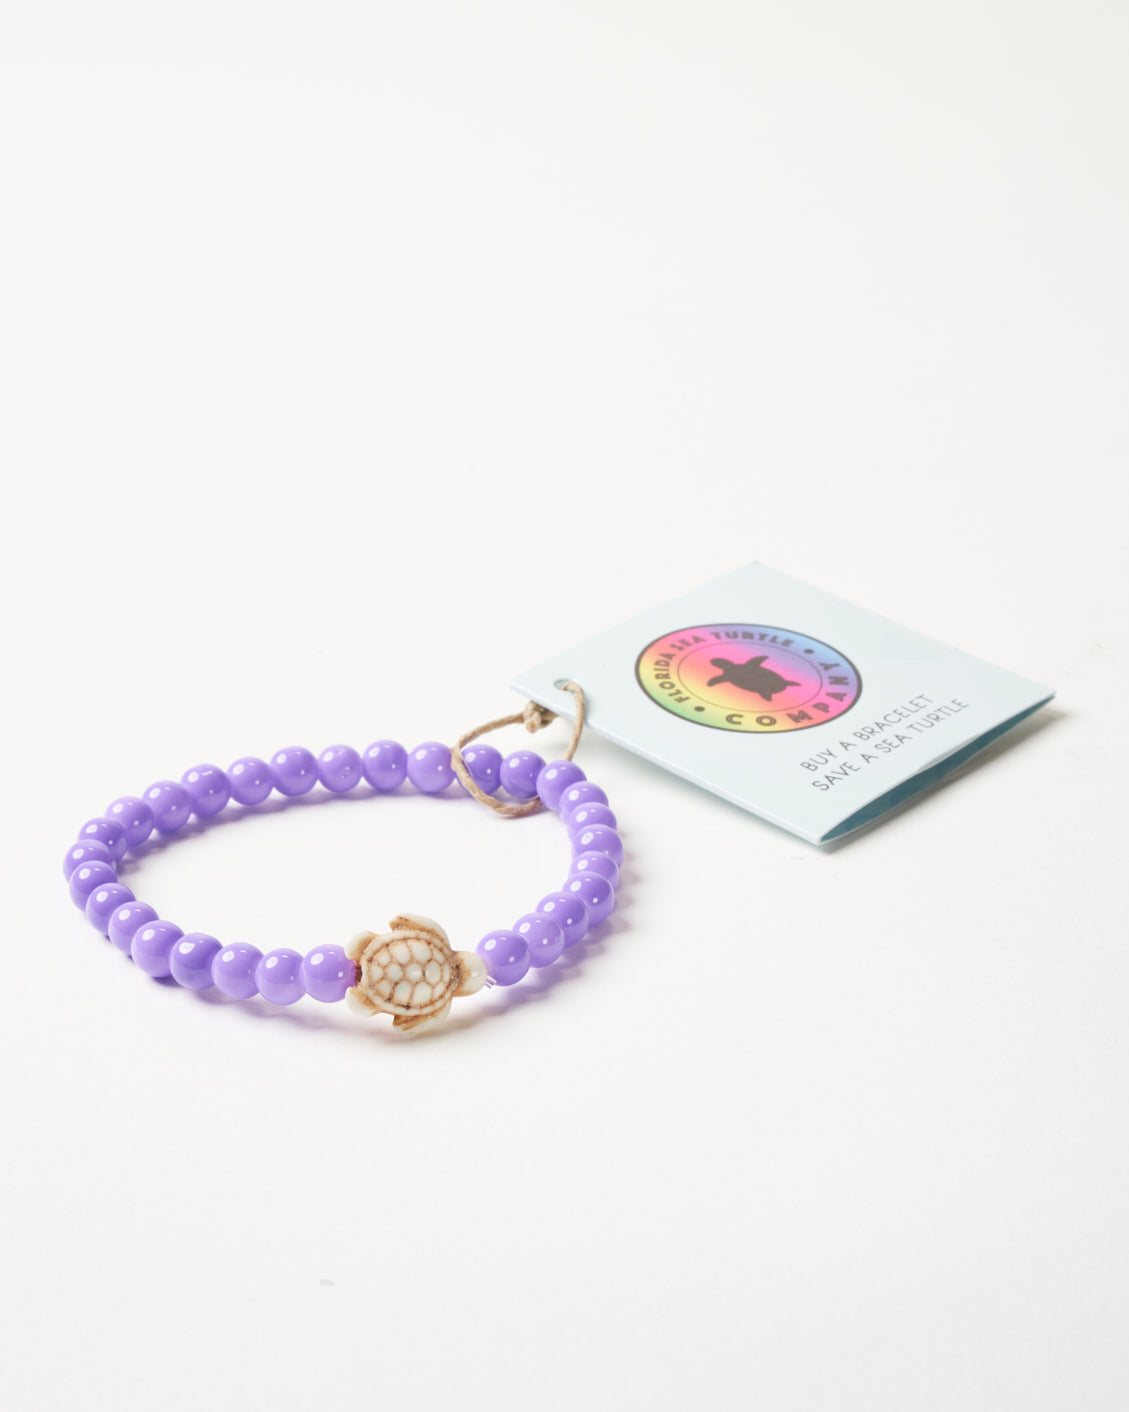 Save a Turtle Bracelet - Purples